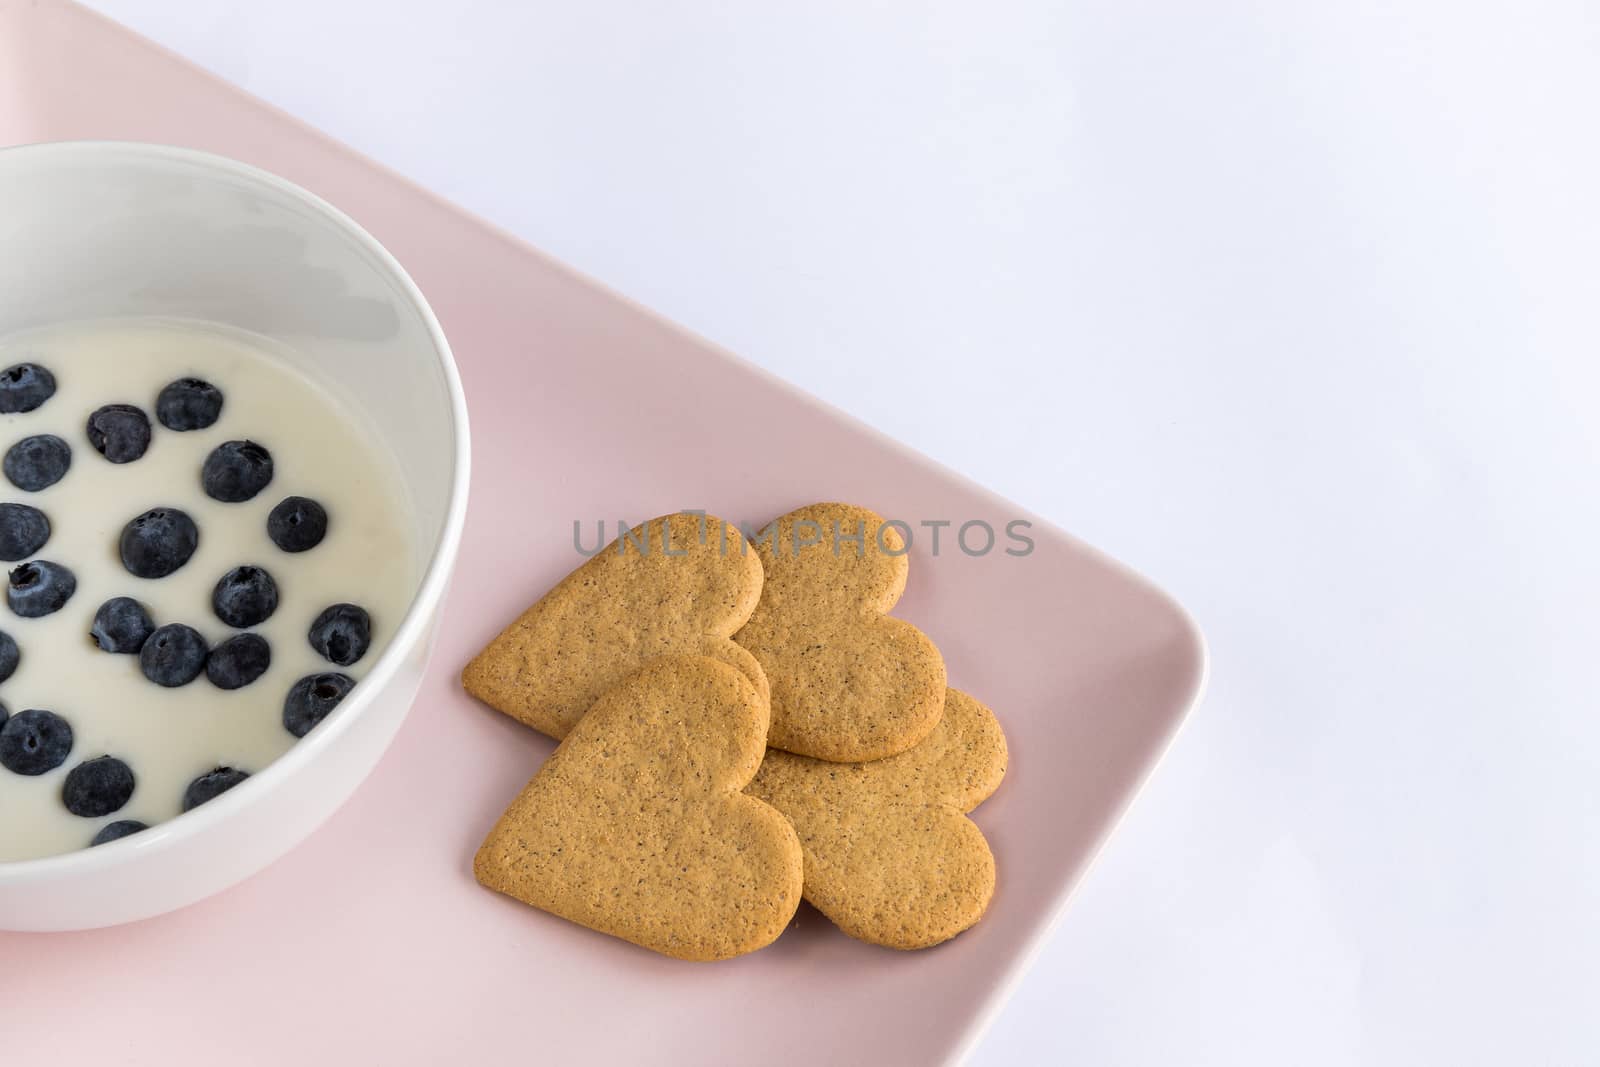 Breakfast. Yogurt with blueberries and cookies. by JRPazos